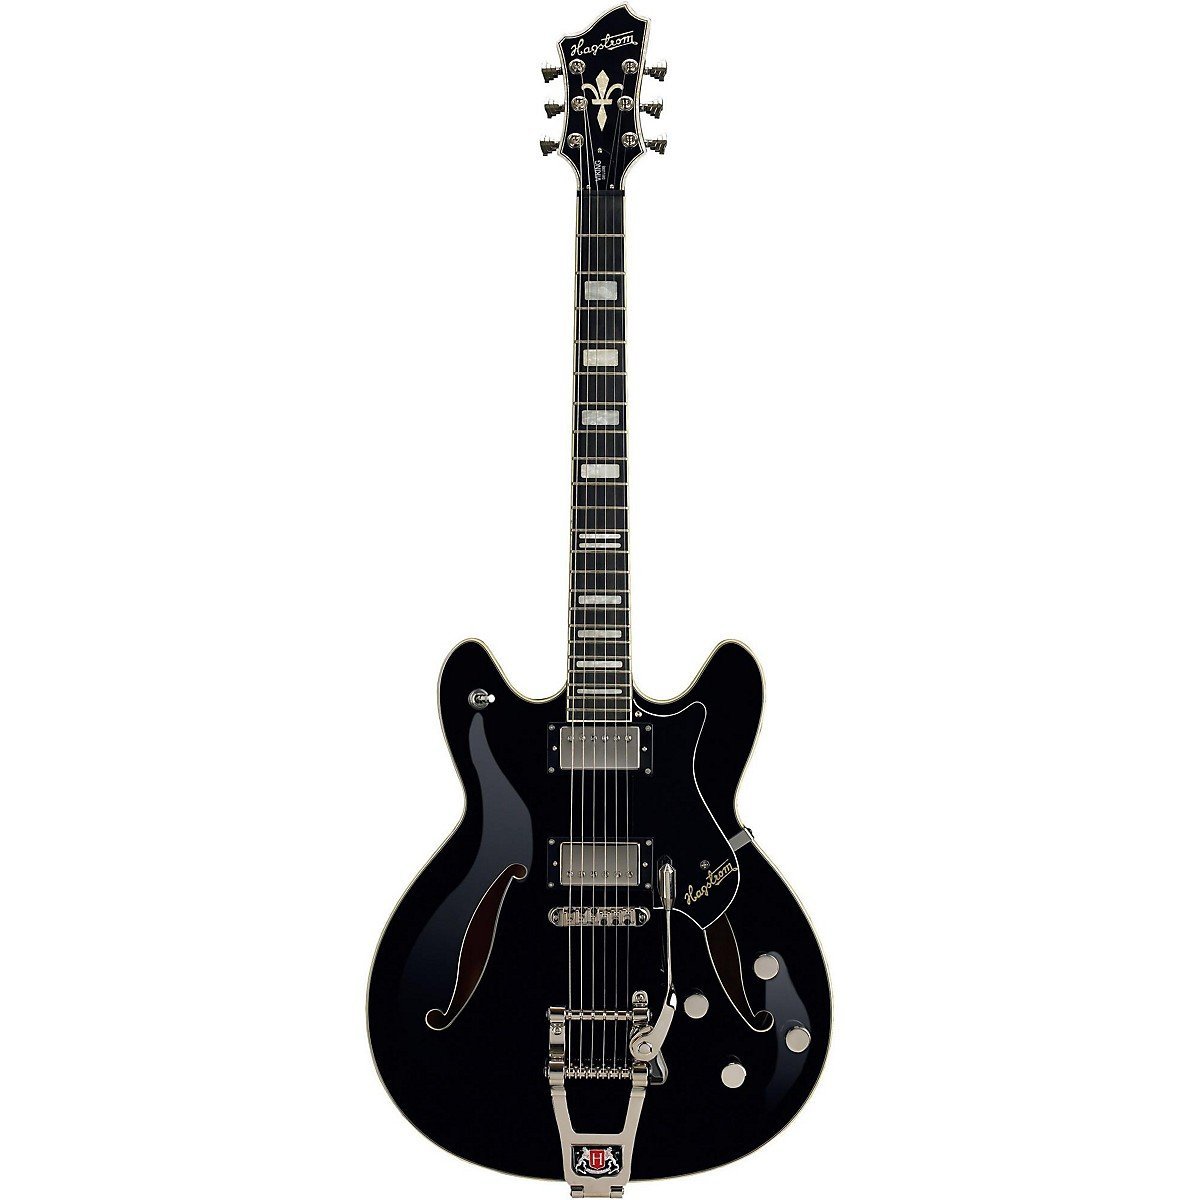 Hagstrom Tremar Series Viking Deluxe Semi-Hollow Electric Guitar - BLACK GLOSS